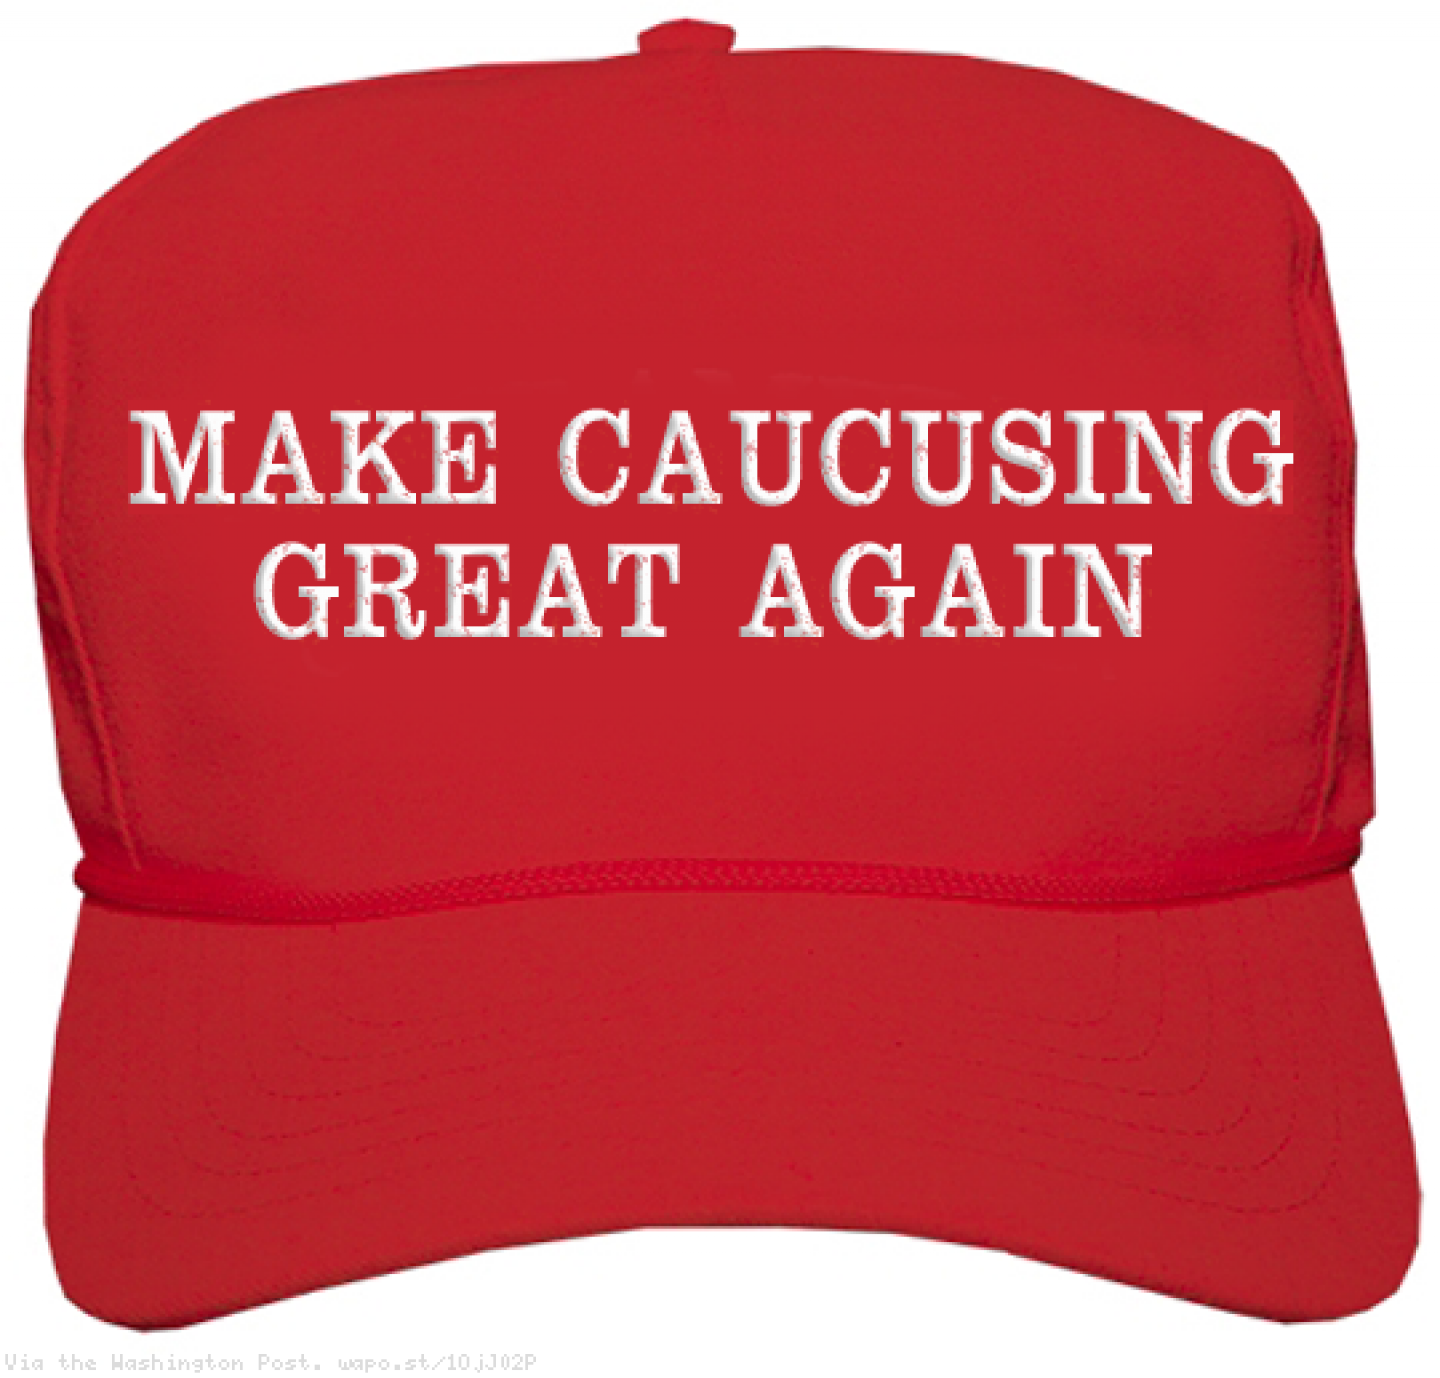 Nevada Caucus, Iowa, Trump, Bernie, Hillary, Cruz, Jeb